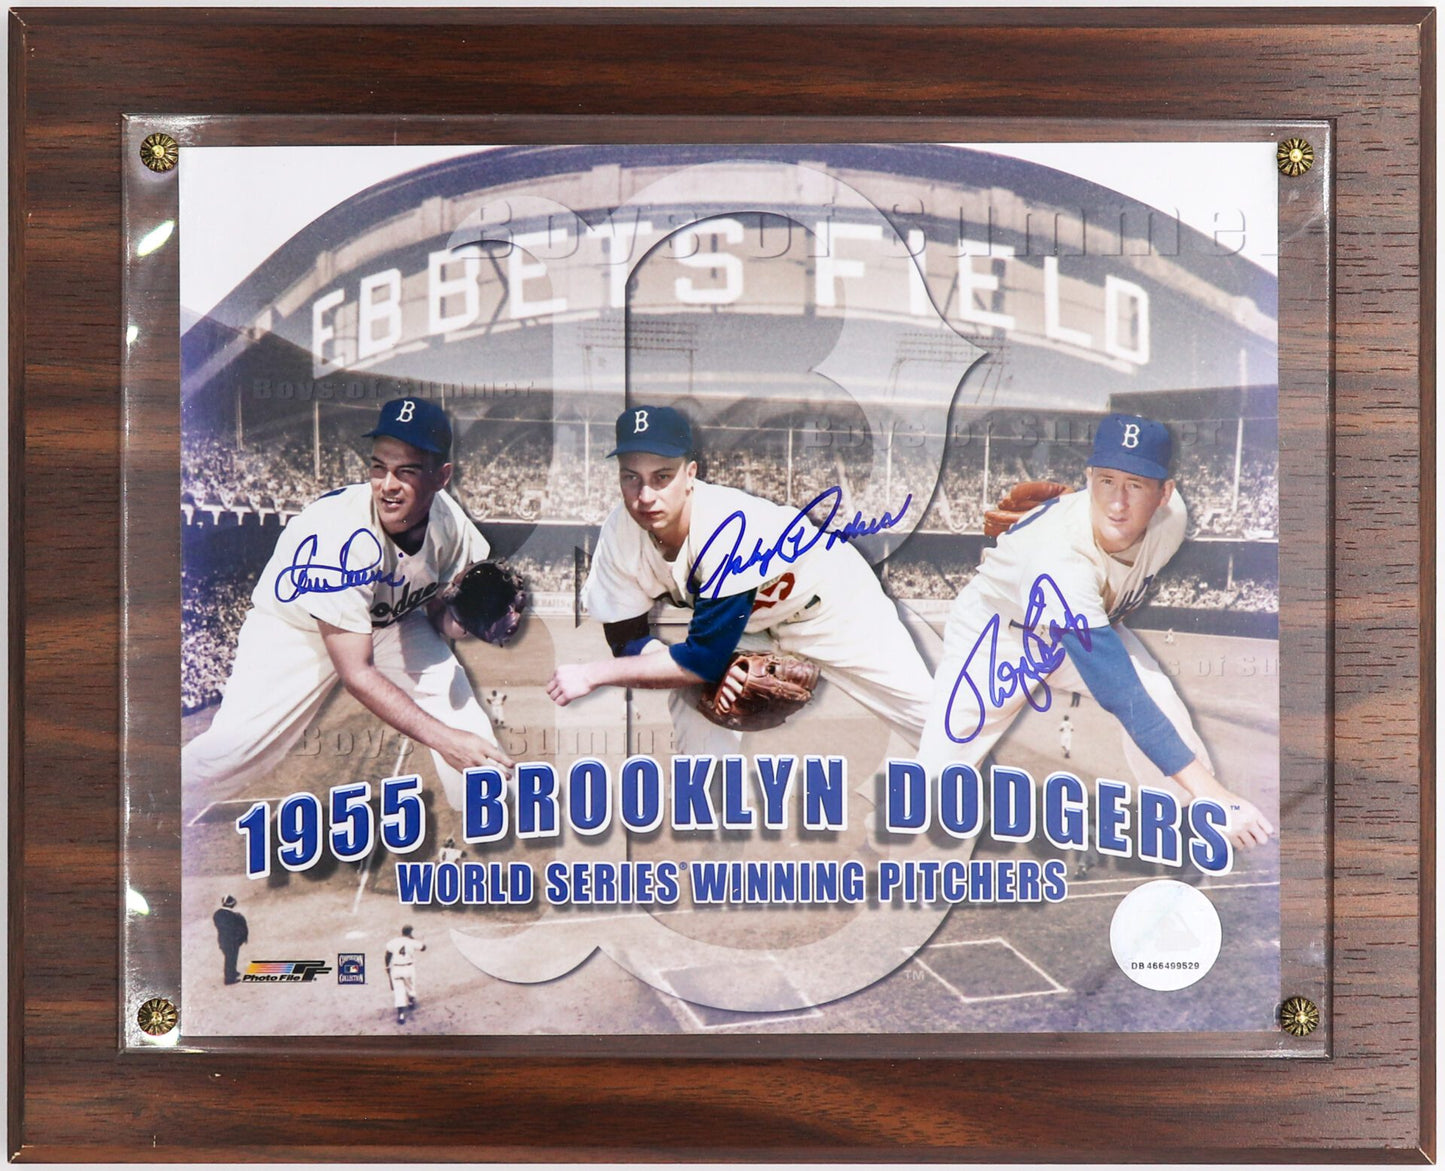 1955 Brooklyn Dodgers Three World Series Winning Pitchers Autographed Presentation Piece Mounted on Wood Base